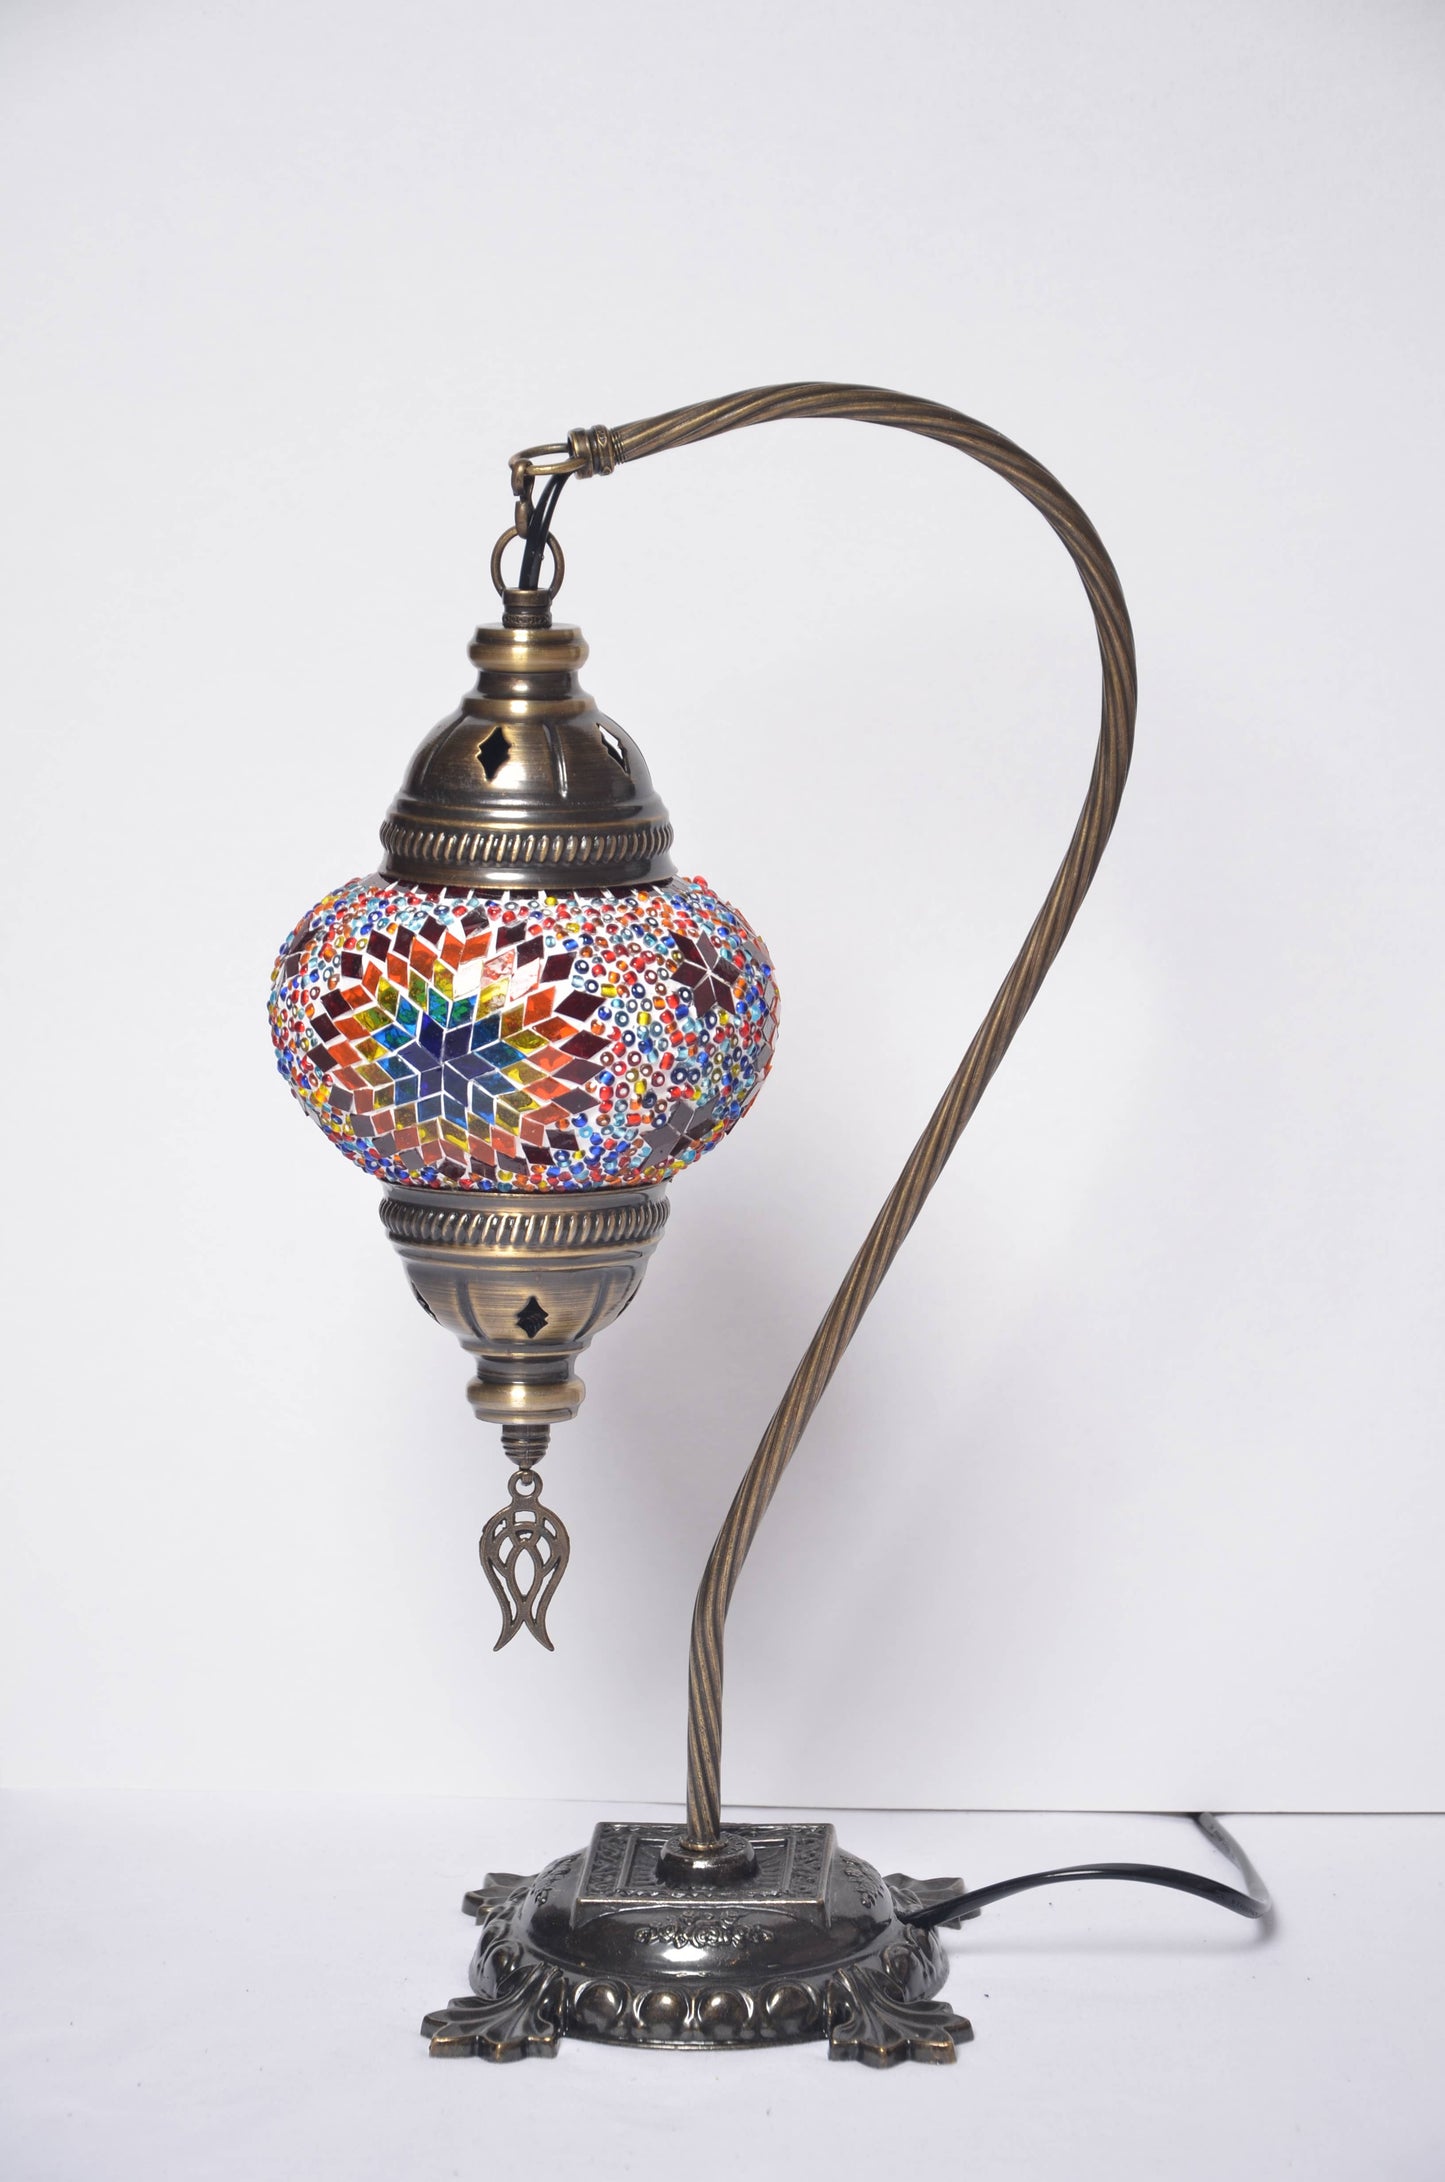 Authentic Anatolian Lamps